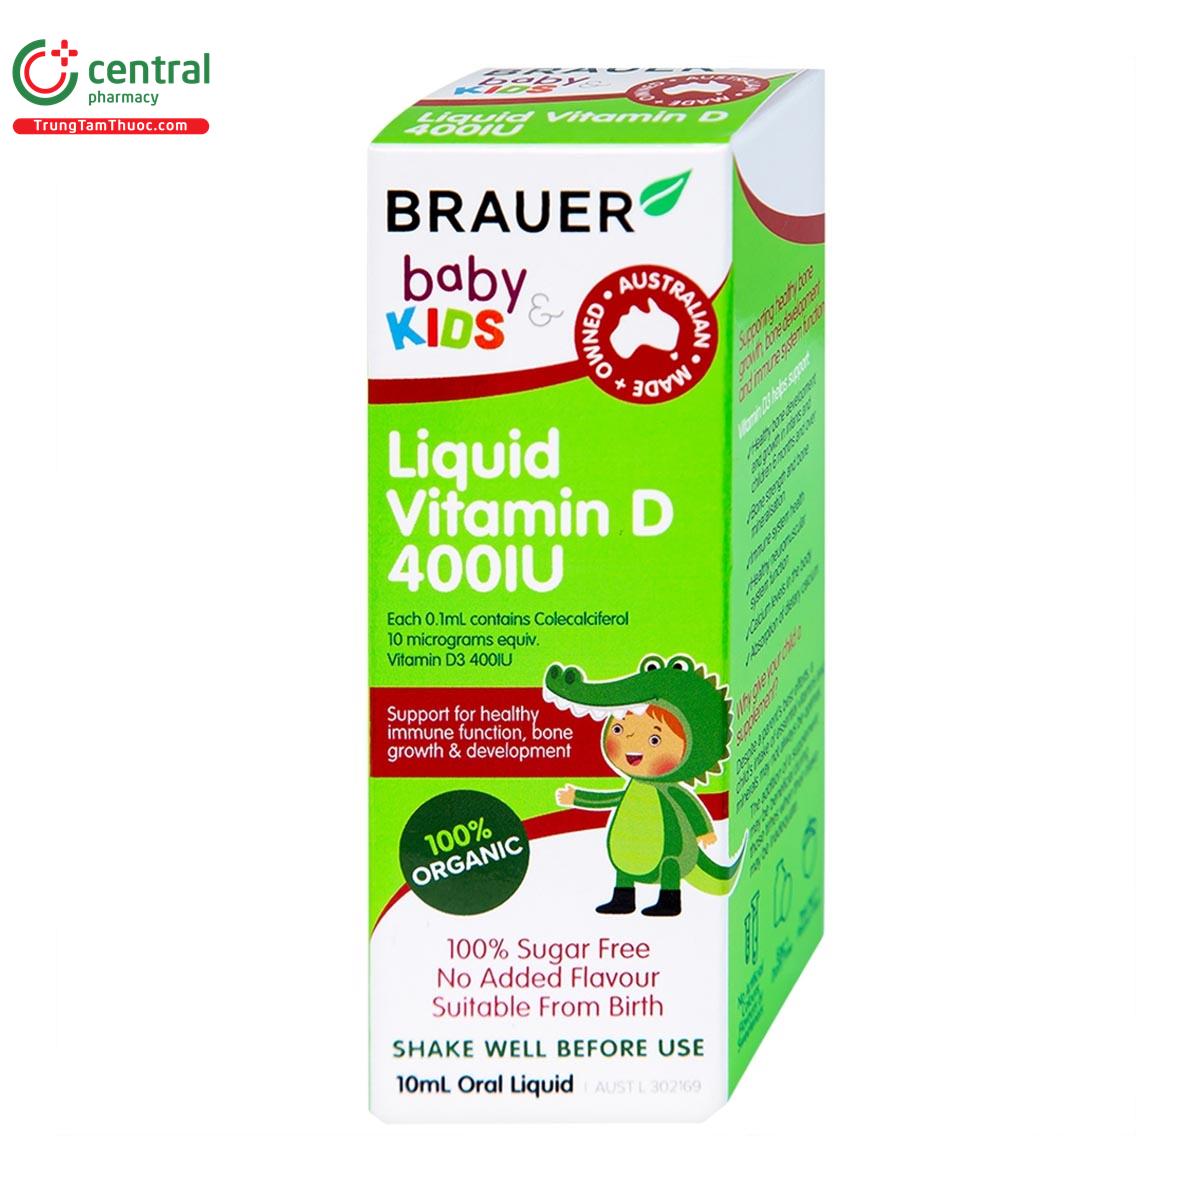 brauer baby kids liquid vitamin d 400iu 5 E1807